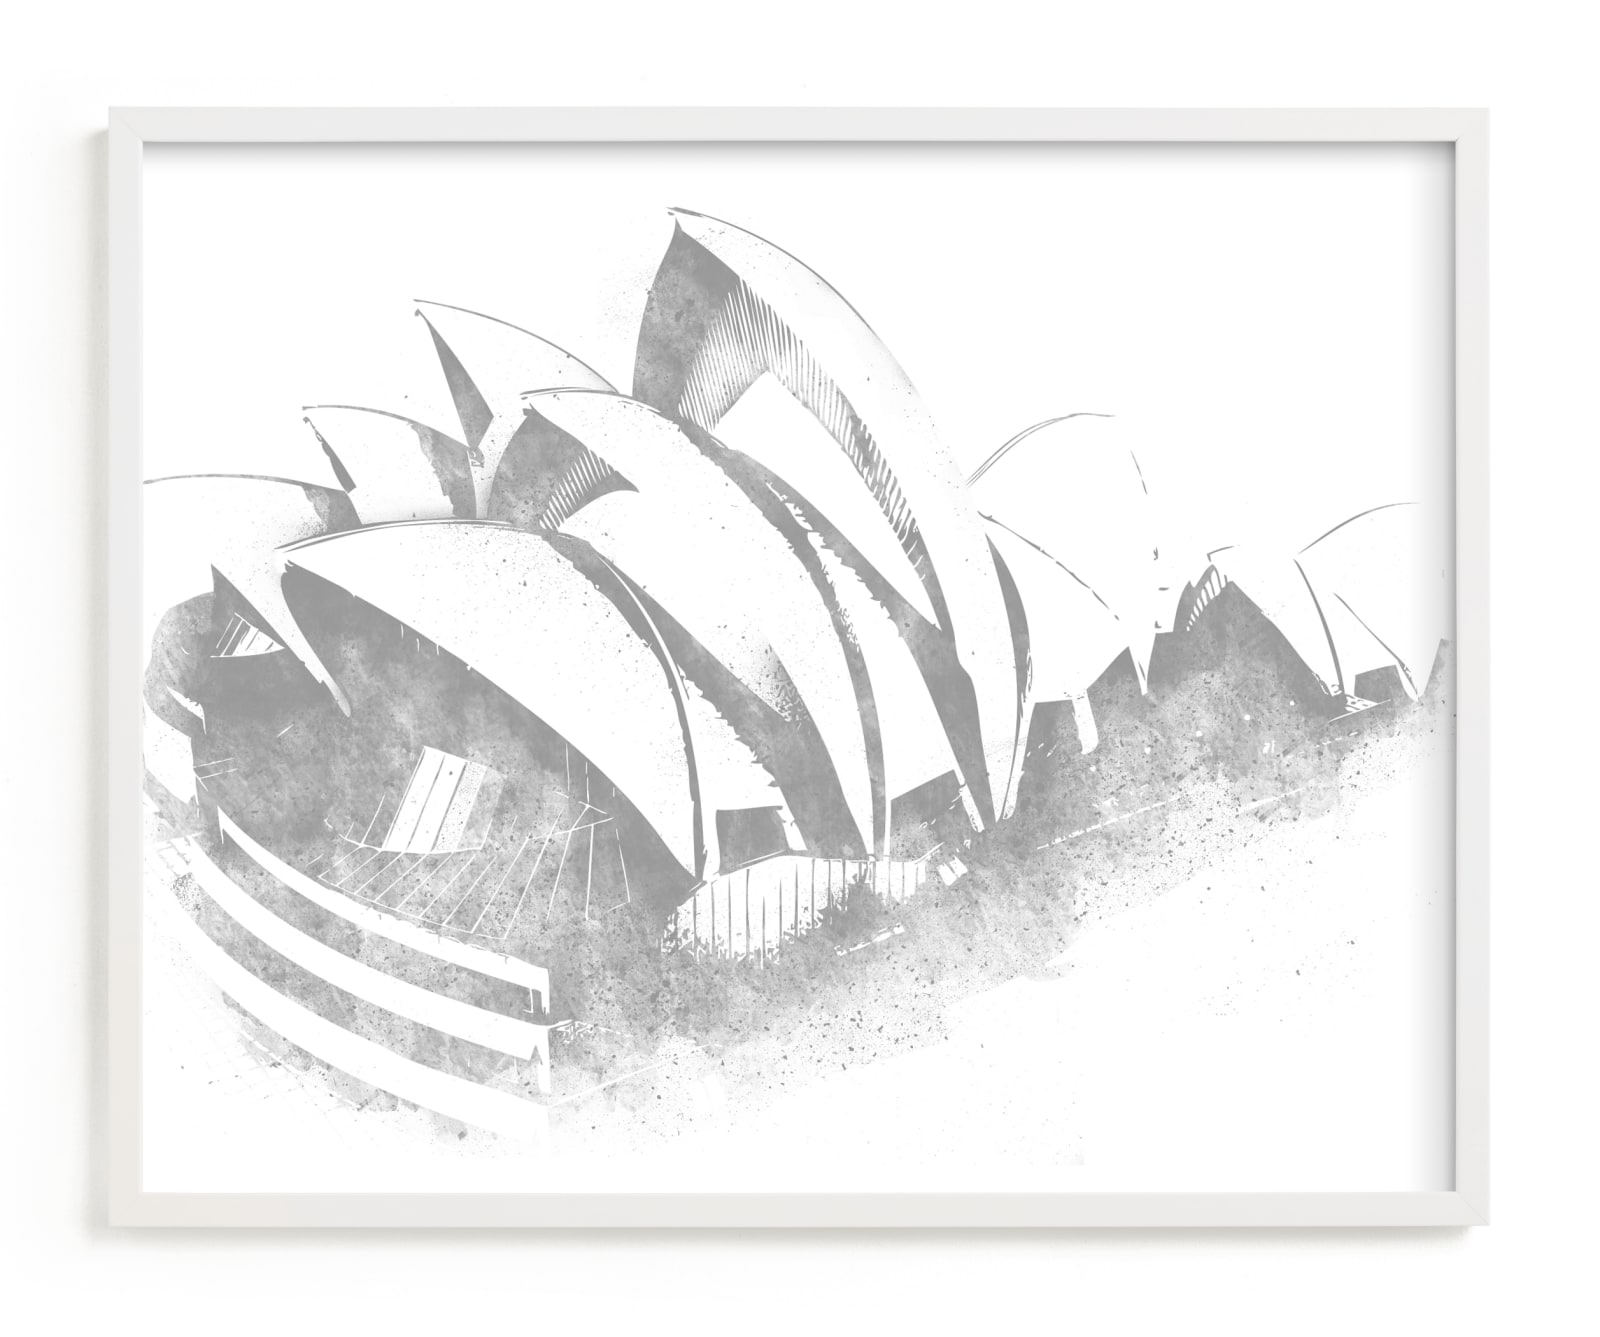 Sketch #162: The Sydney Opera House